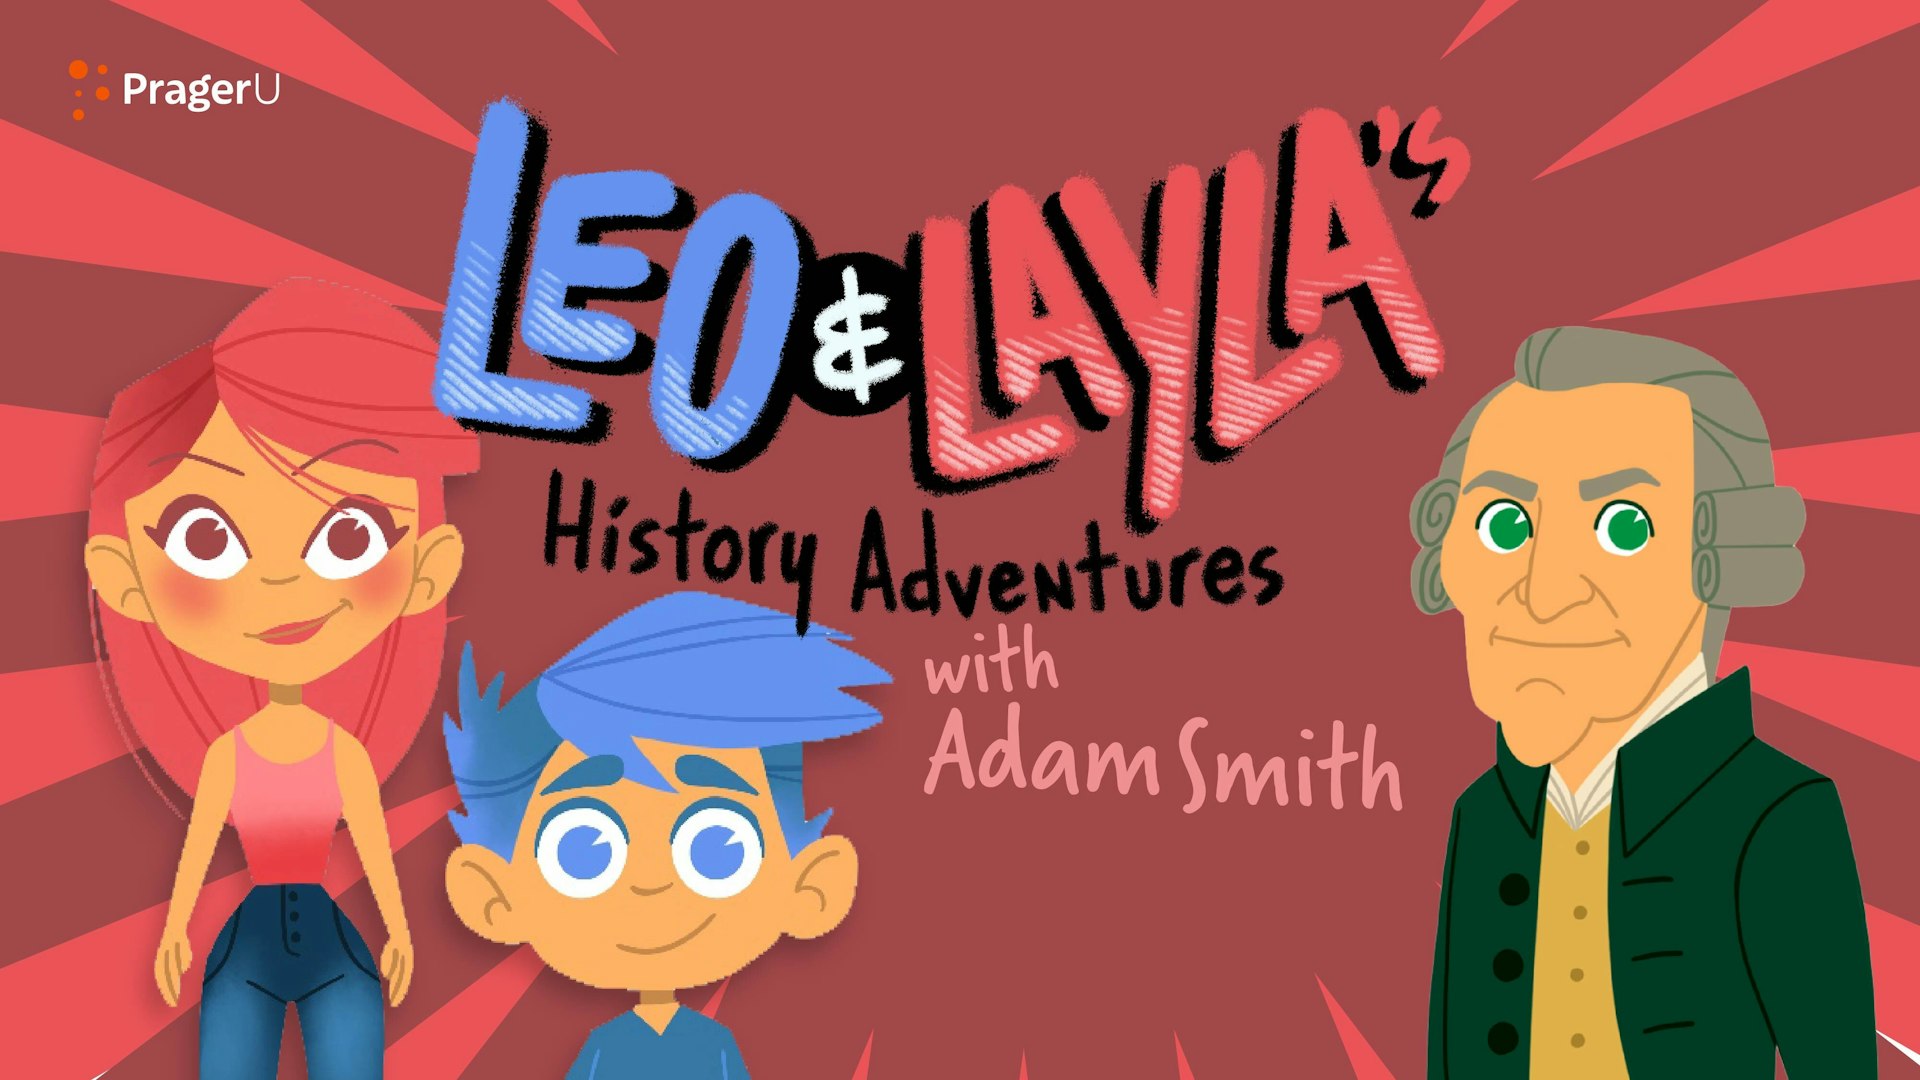 Leo & Layla's History Adventures with Adam Smith